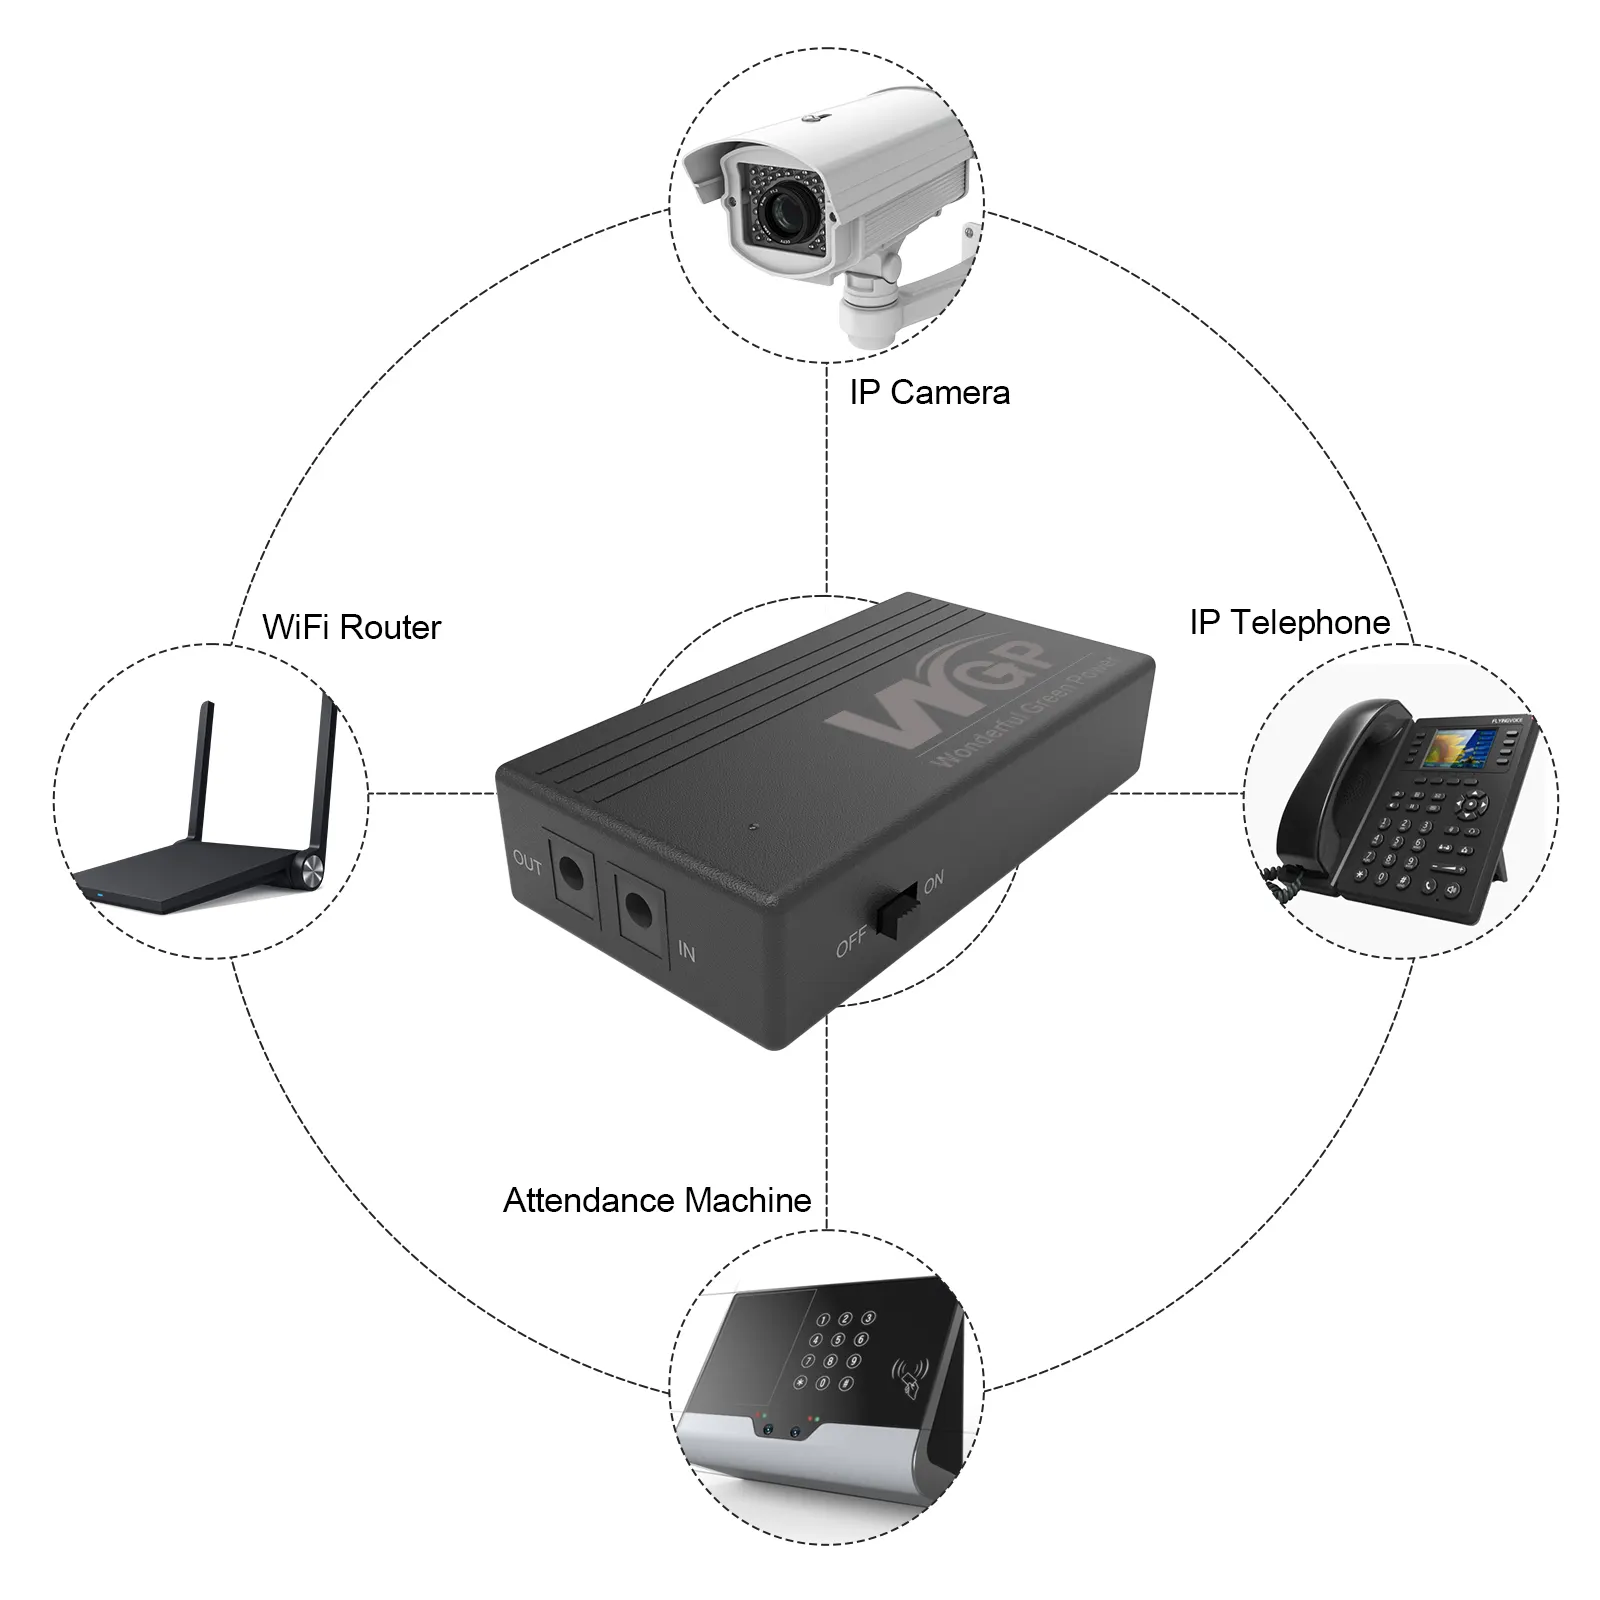 WGP DC USV Batterie versorgung Power Bank DC 12V Mini-Ups für WLAN-Router Modem CCTV-Kamera Home